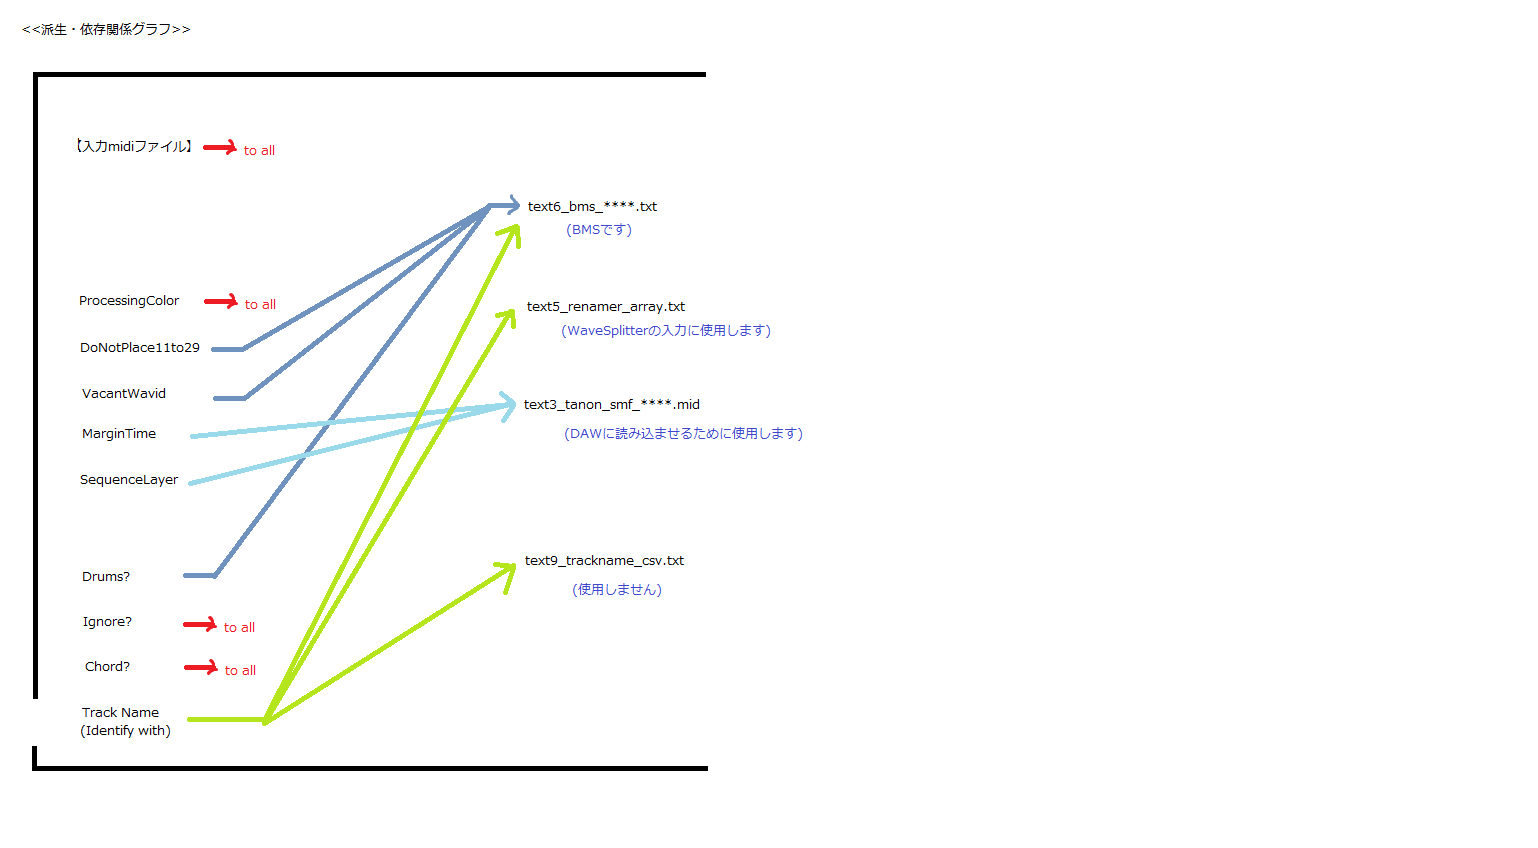 Mid2BMSの依存関係グラフ.png